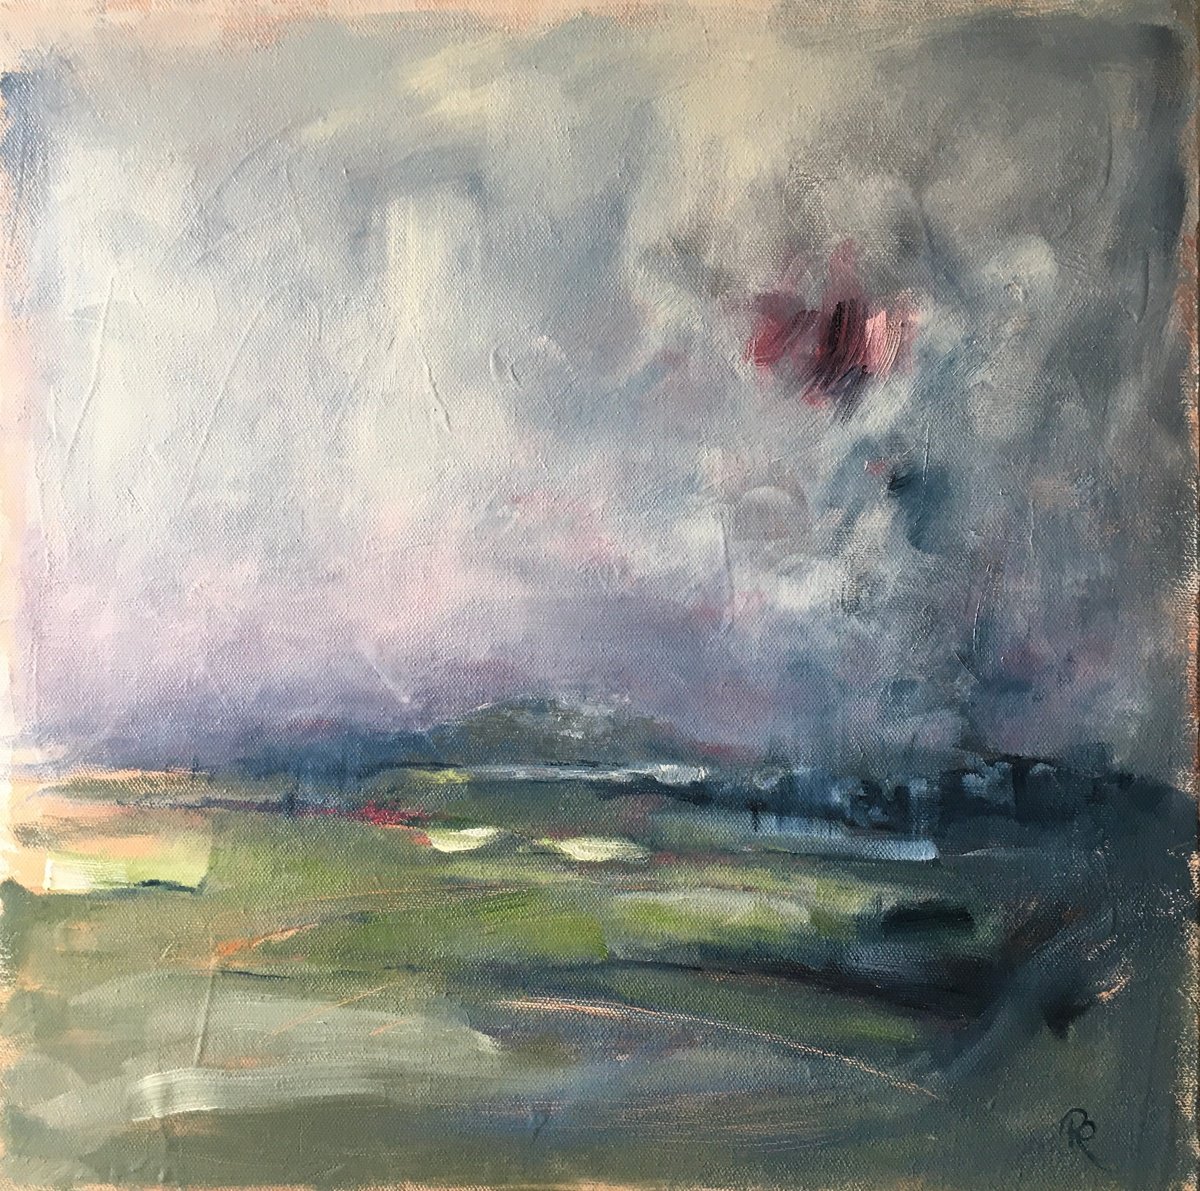 Over the Wrekin by Rebecca Pells